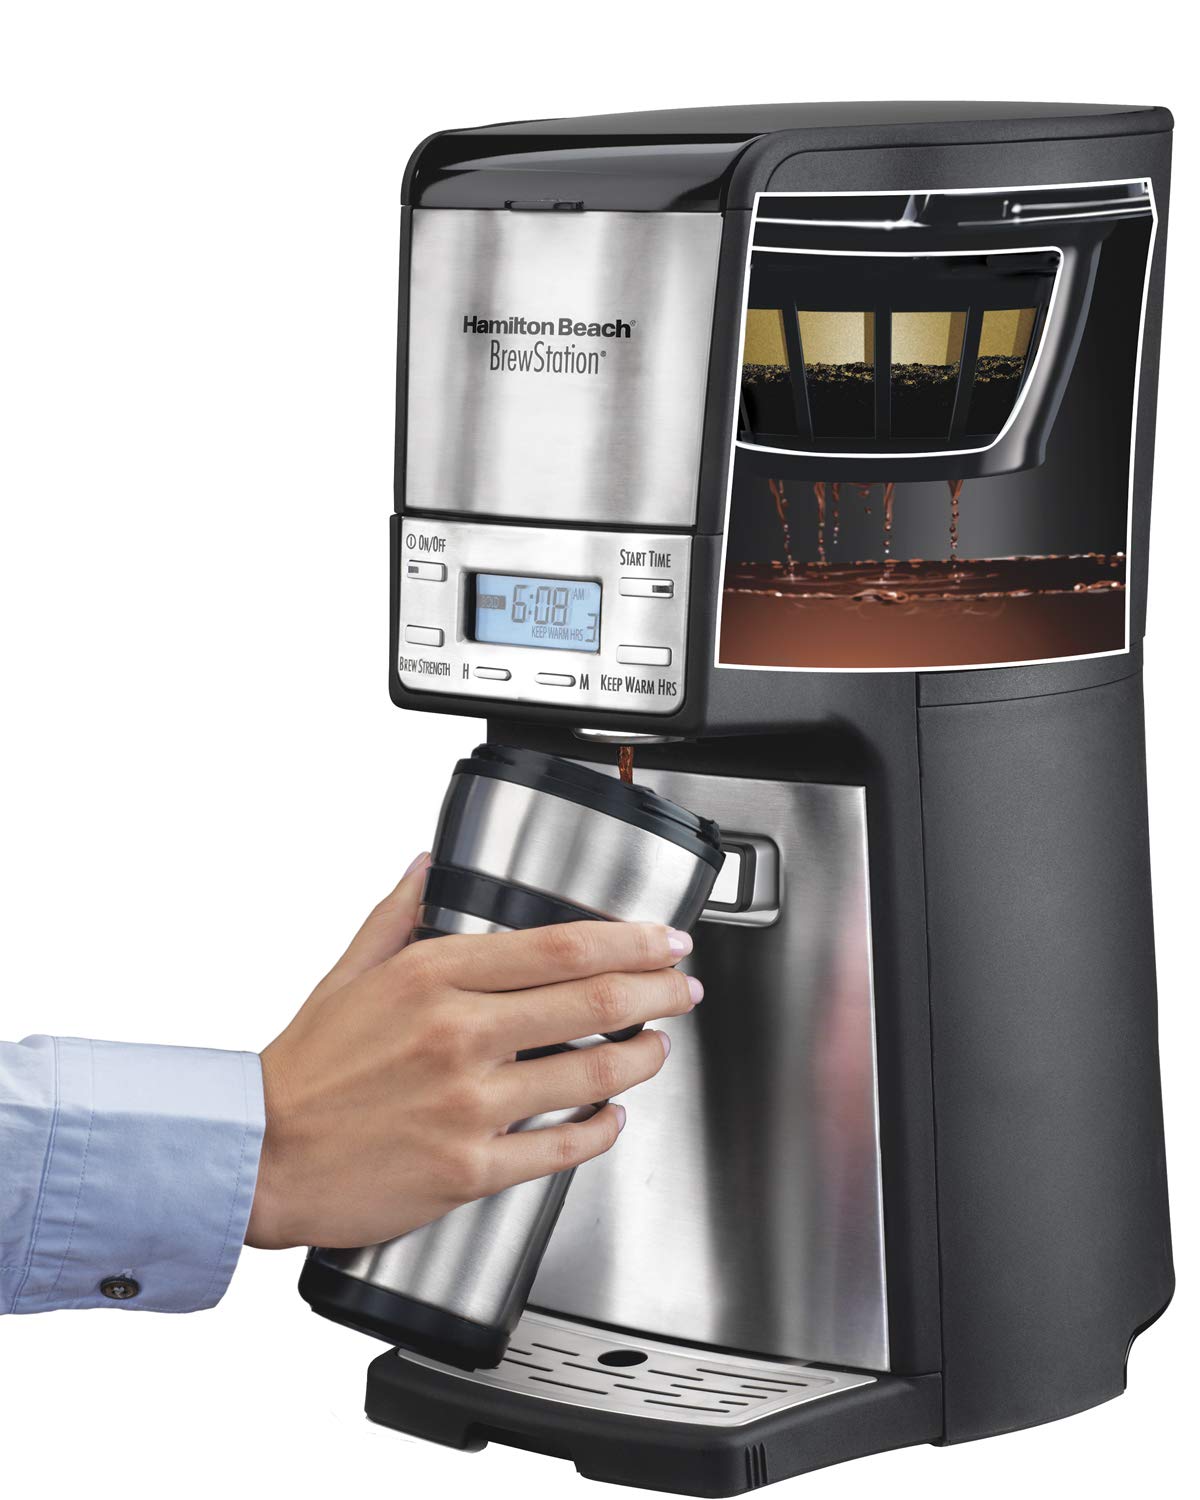 Hamilton Beach BrewStation 12 Cup Dispensing Coffee Maker, Gentle Keep Warm Preserves Flavor, Programmable, Auto Shutoff, Gold Tone Filter, 110V 60 Hz USA Plug, Stainless Steel (48465)